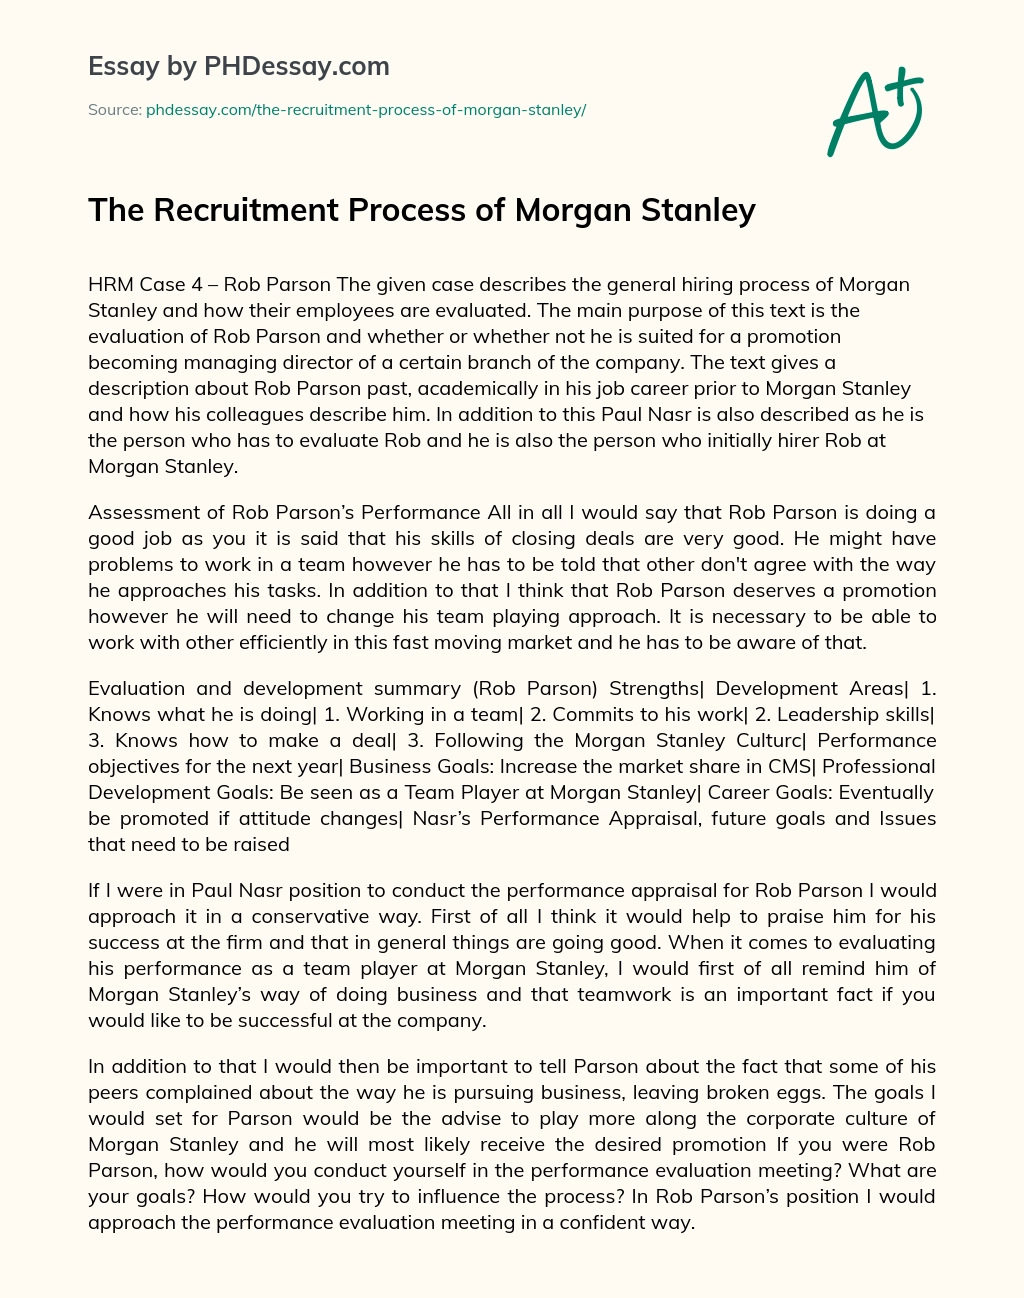 The Recruitment Process of Morgan Stanley essay